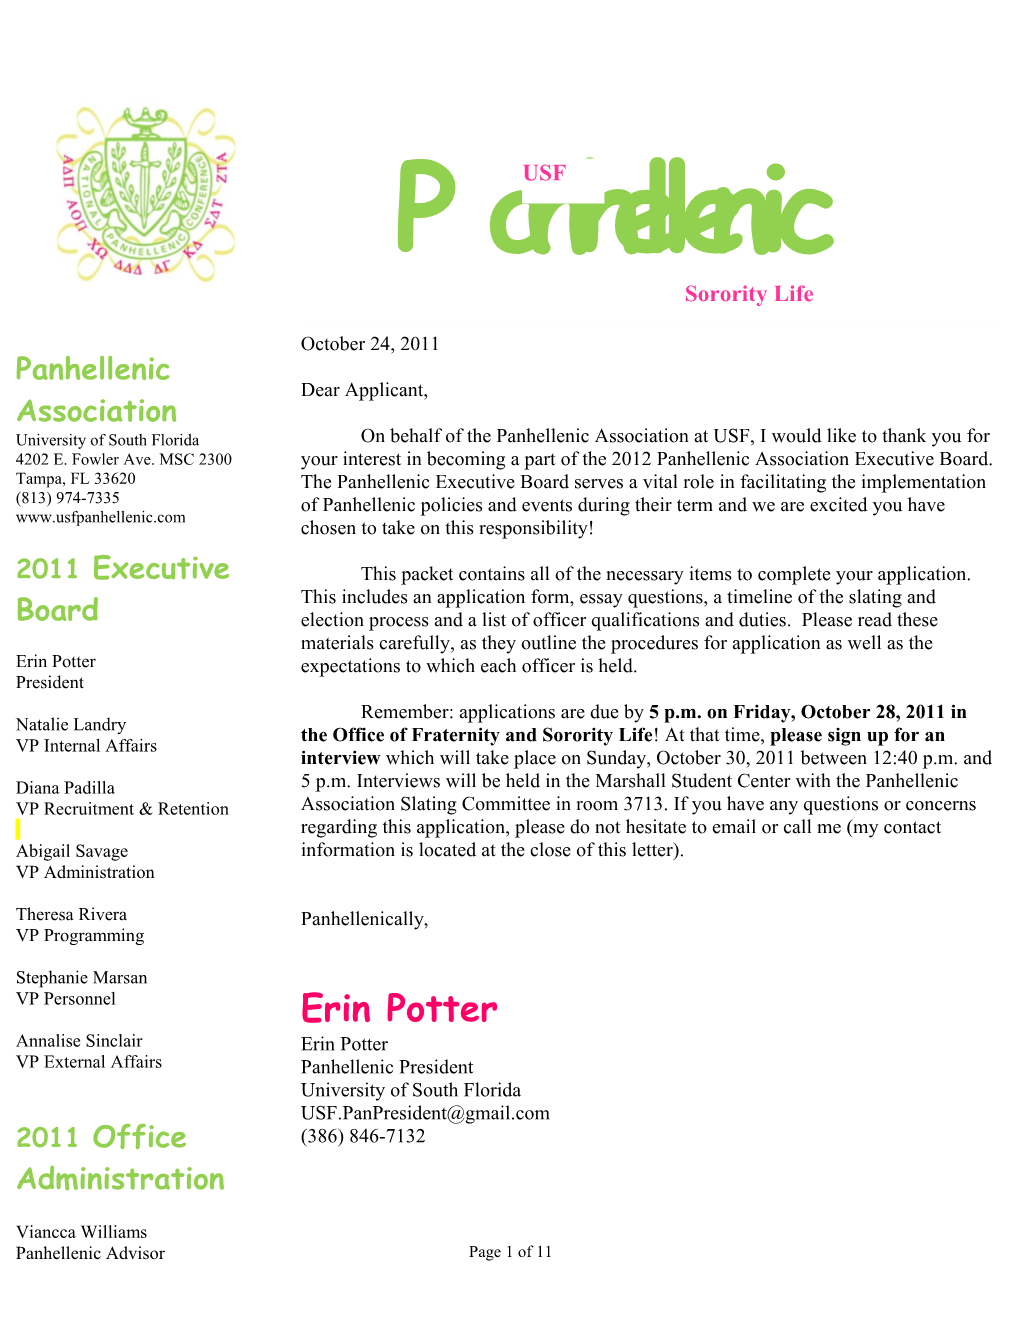 Panhellenic Executive Board Application Checklist